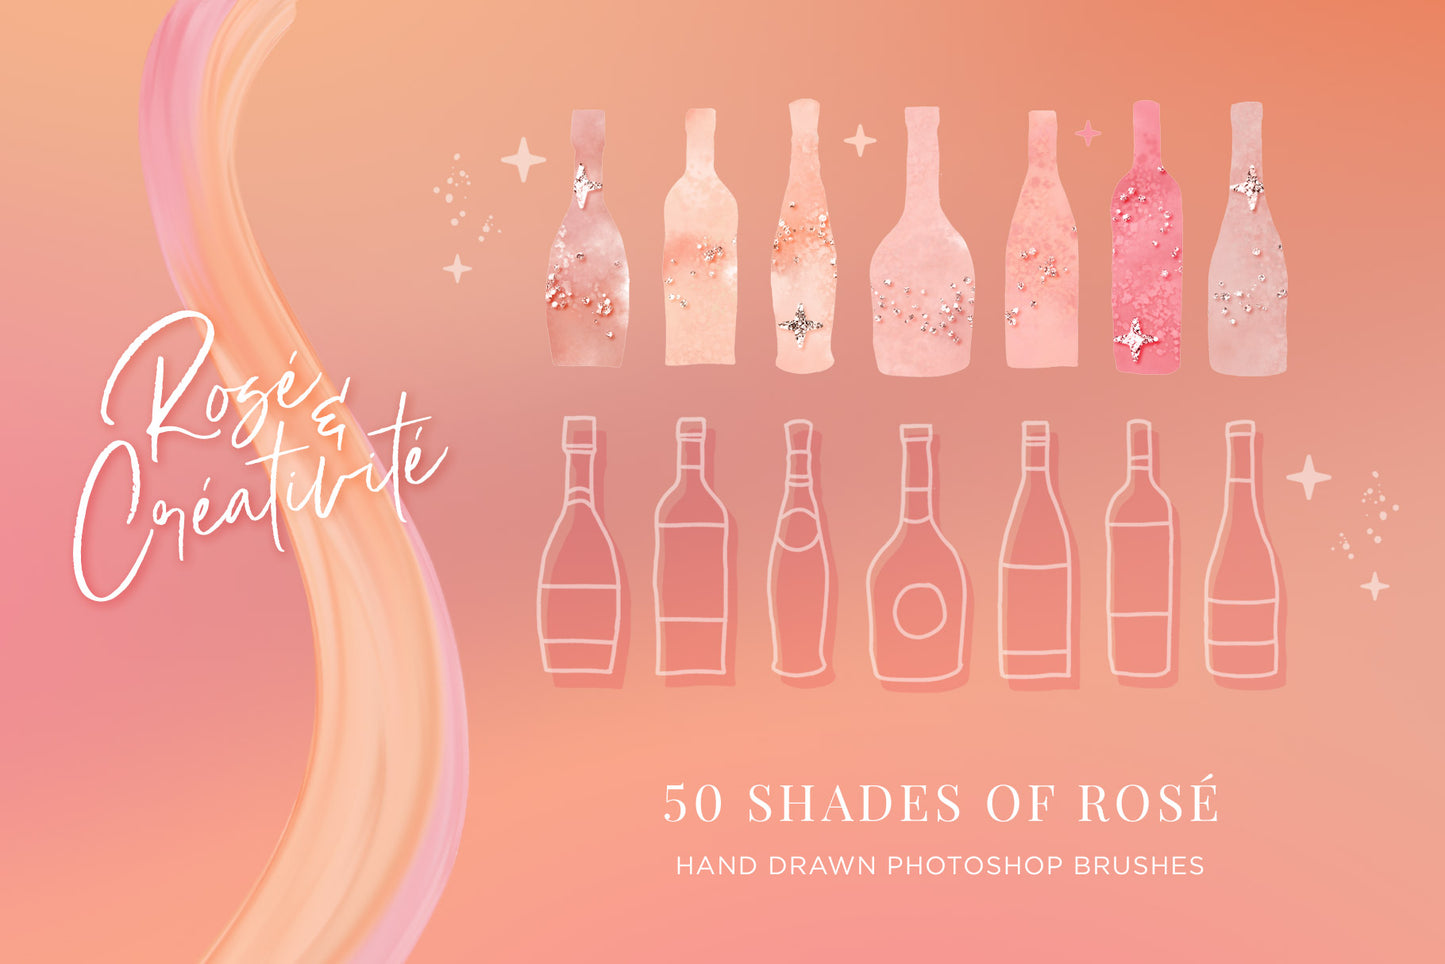 Rosé wine themed Color Palette & Color-Blending Brush Collection, wine bottle brush illustrations